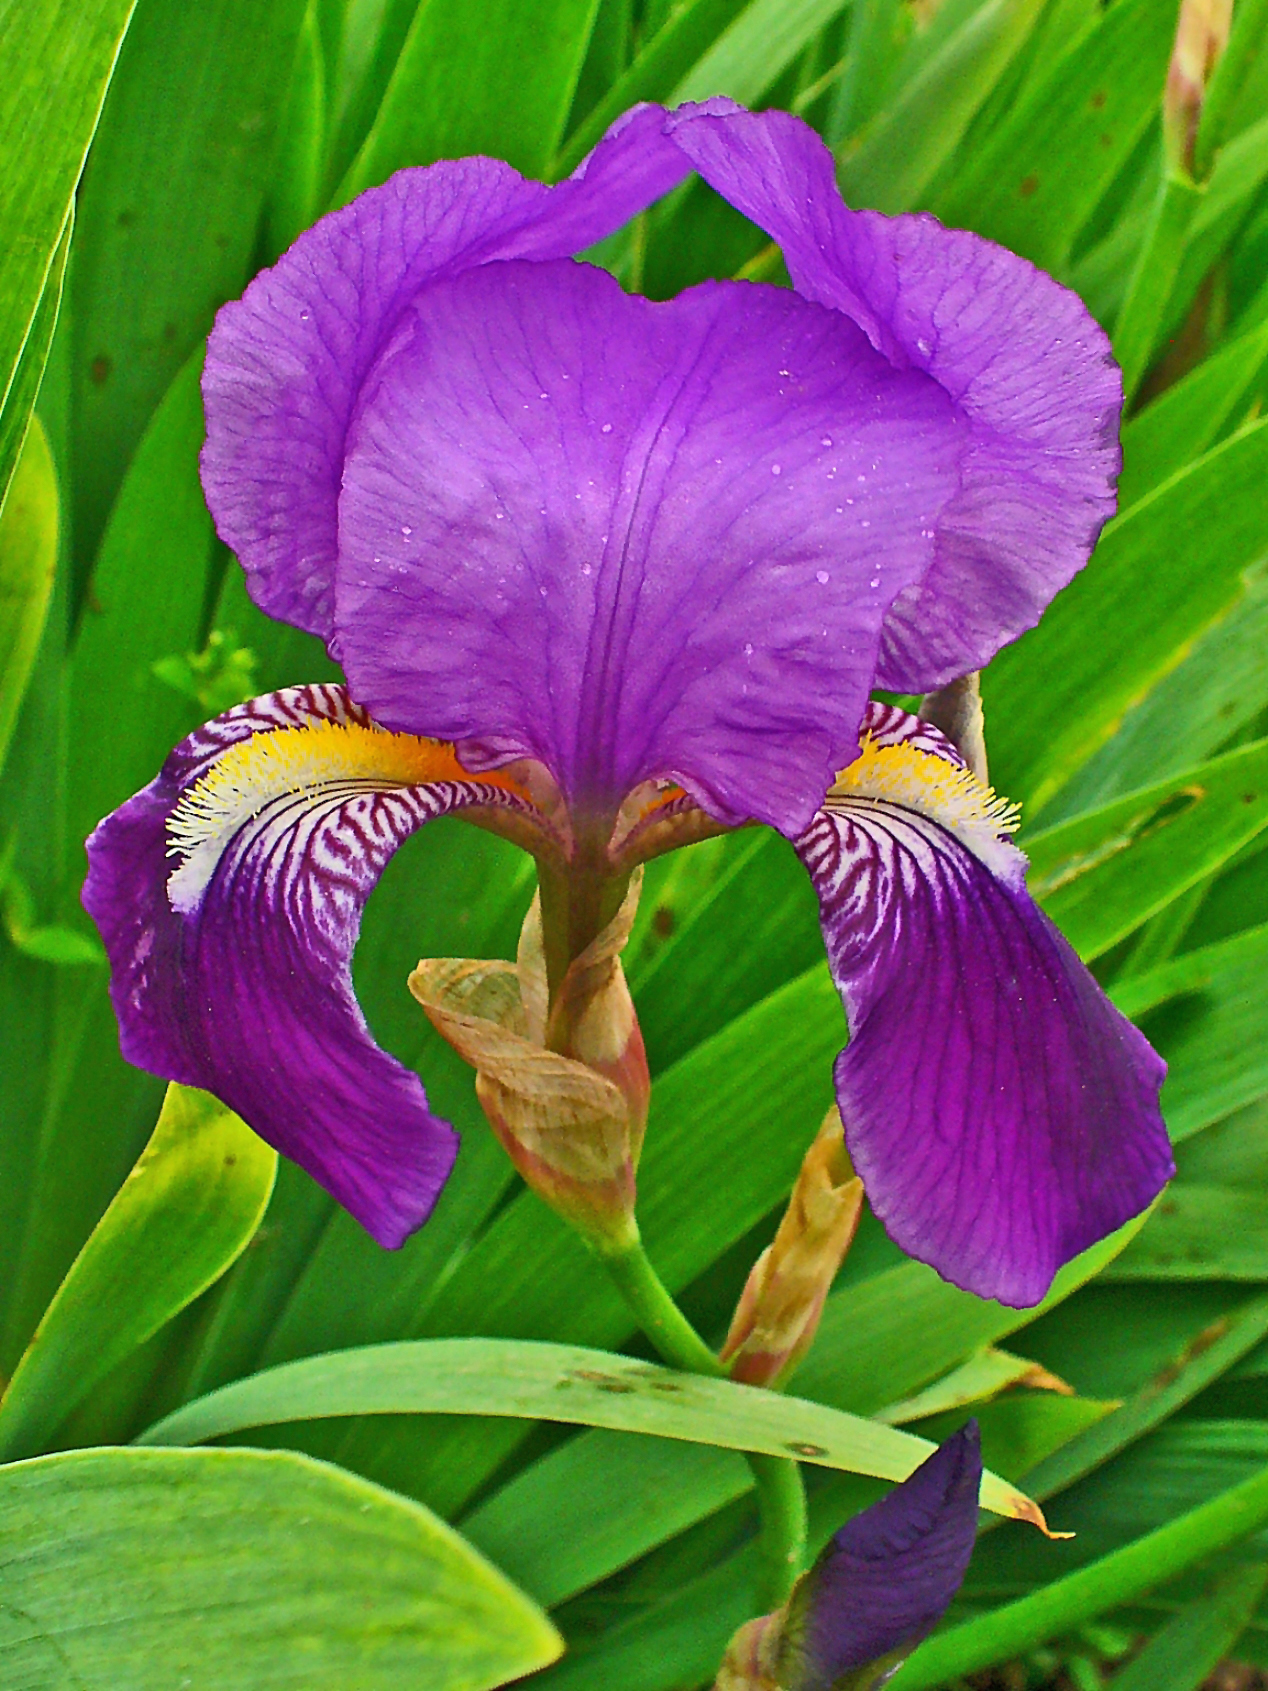 File:Iris germanica 0003.JPG - Wikimedia Commons